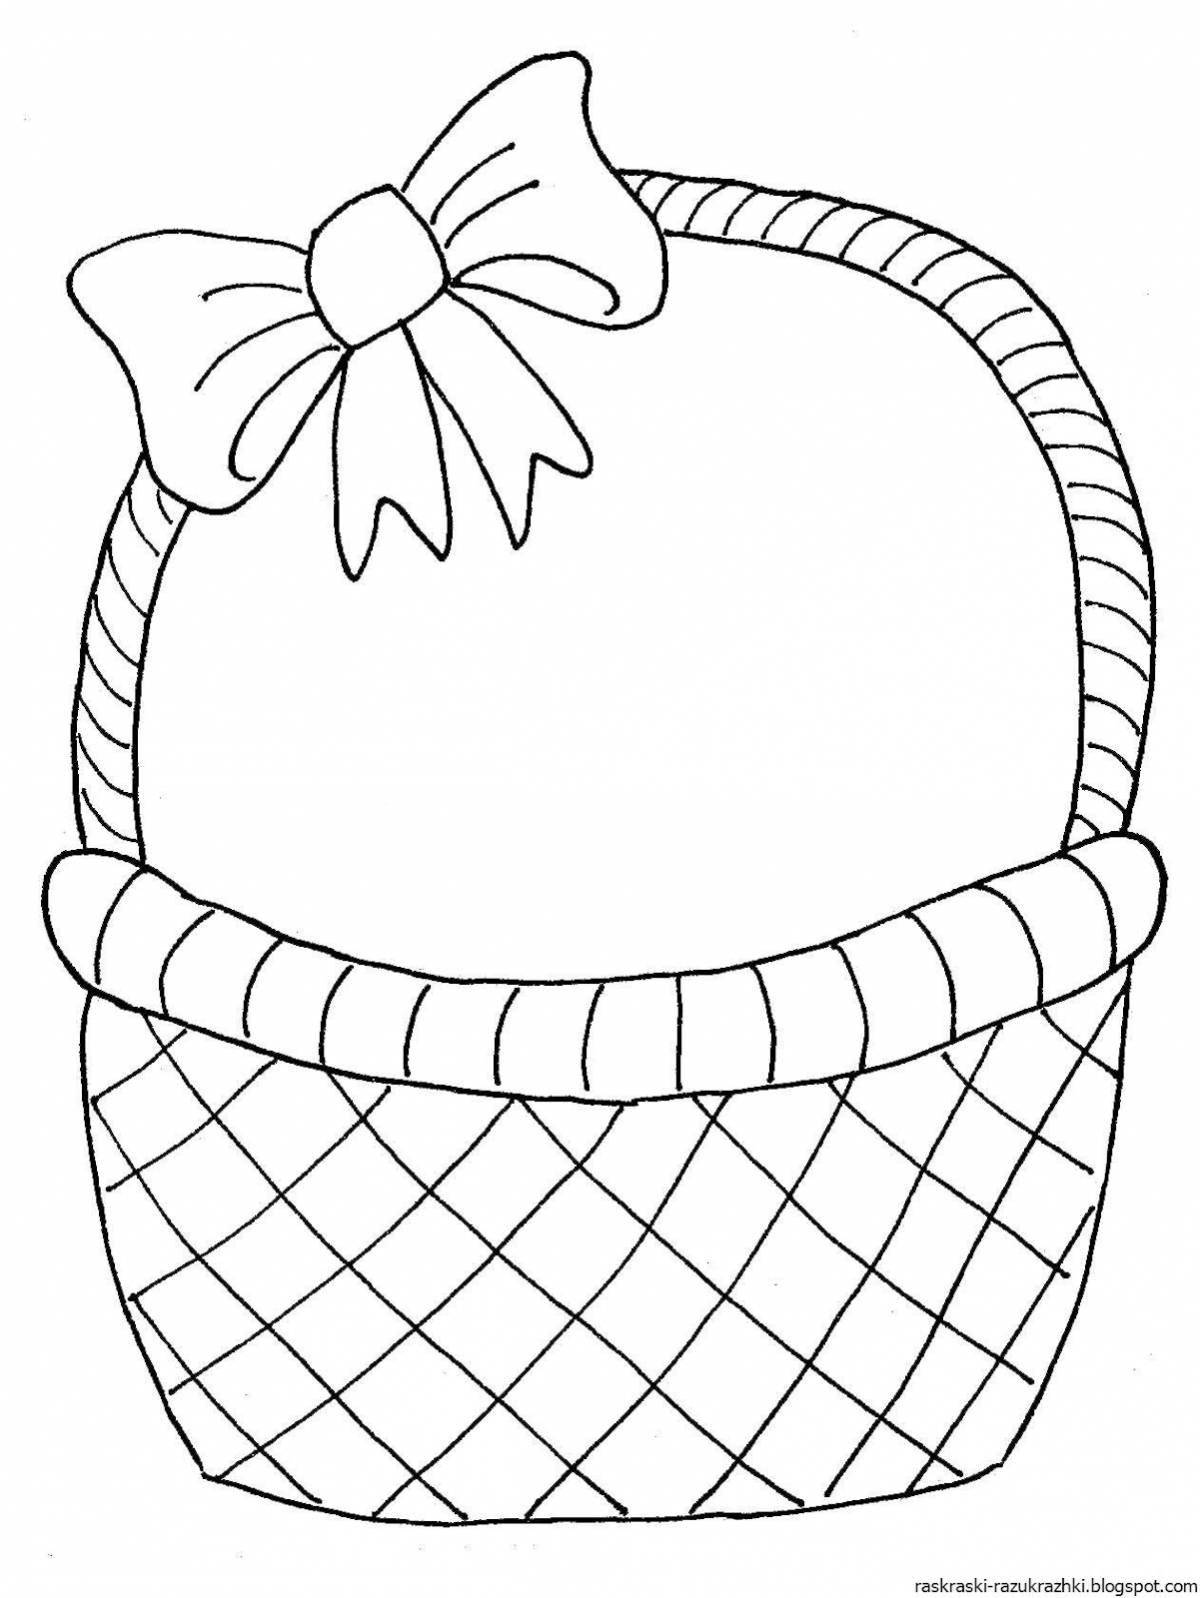 Juvenile sparkling basket coloring page